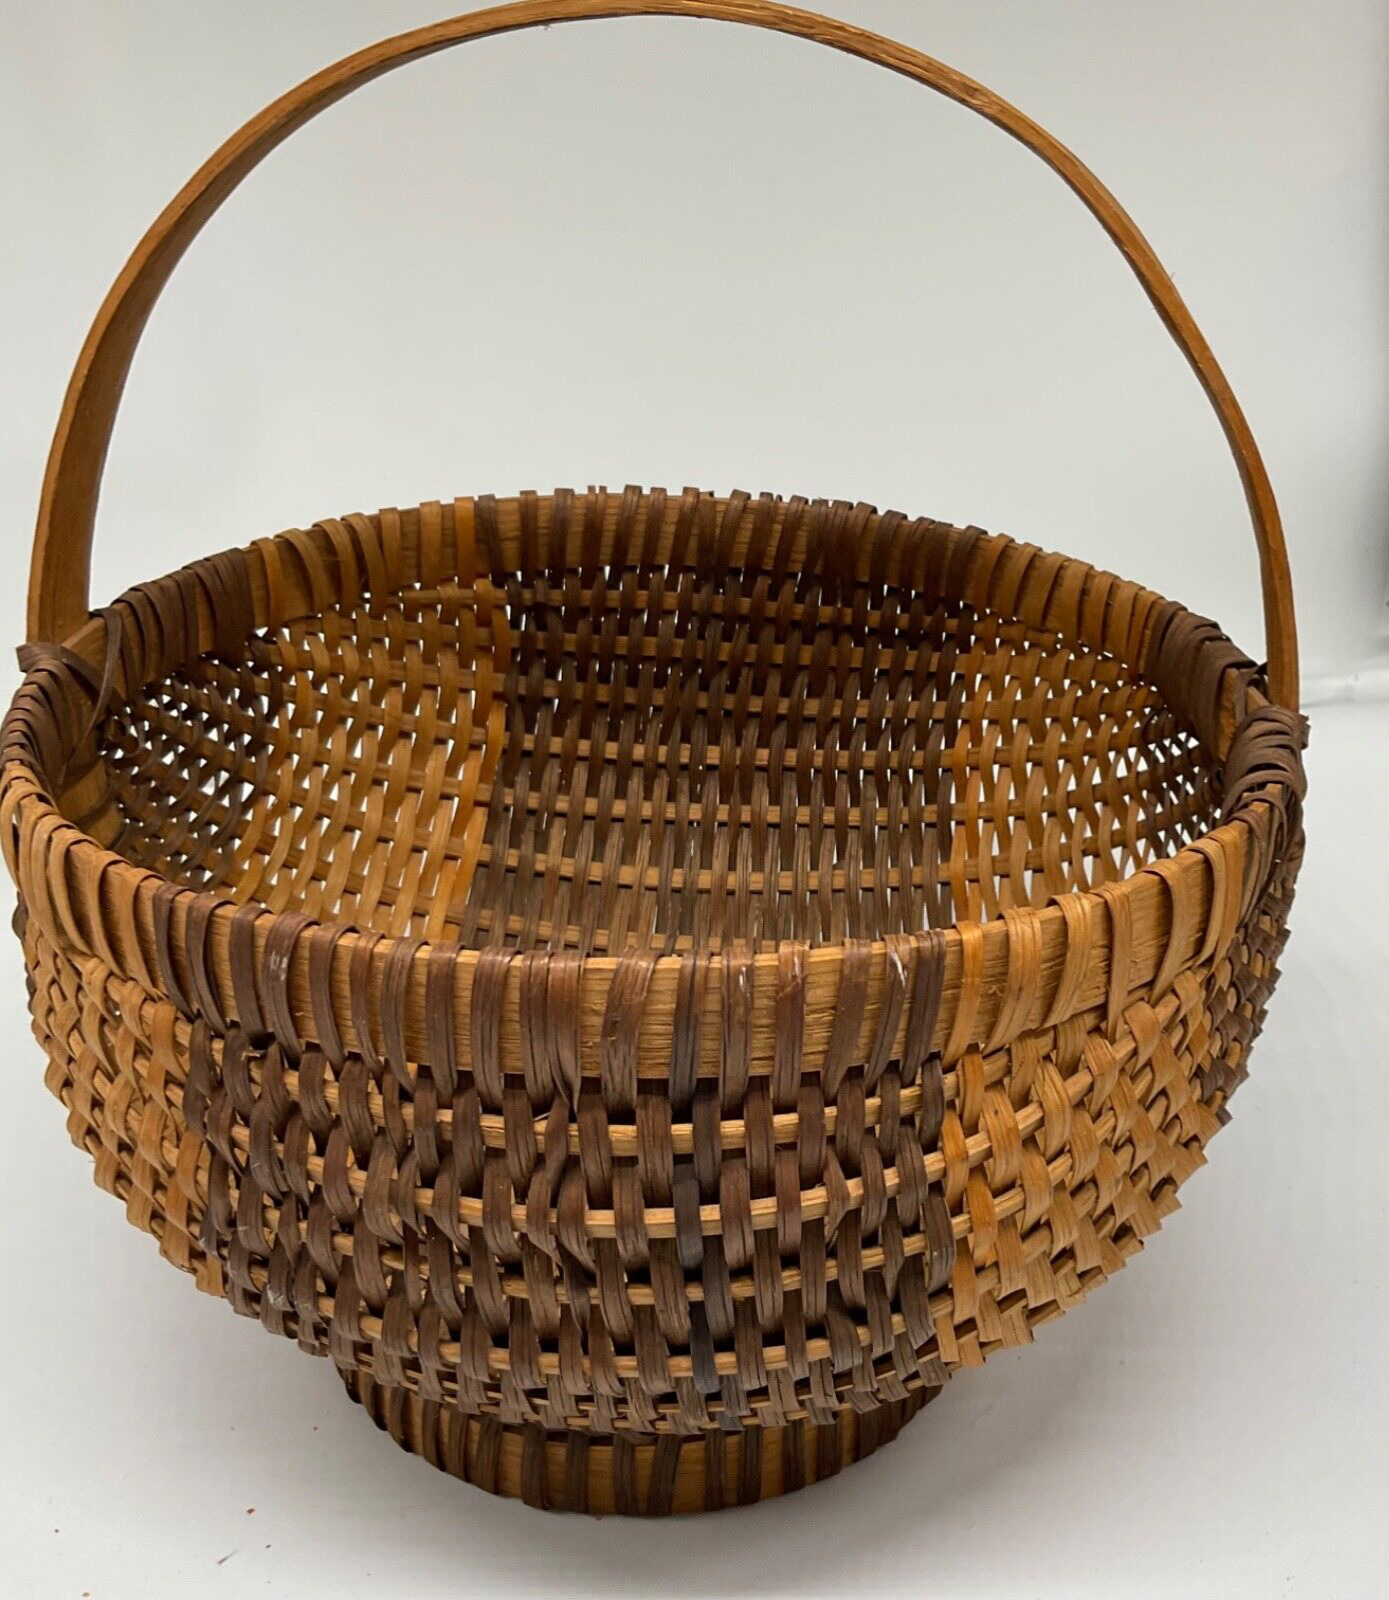 Medium Rustic Gathering Woven Wicker Basket Natural Light Brown Sturdy